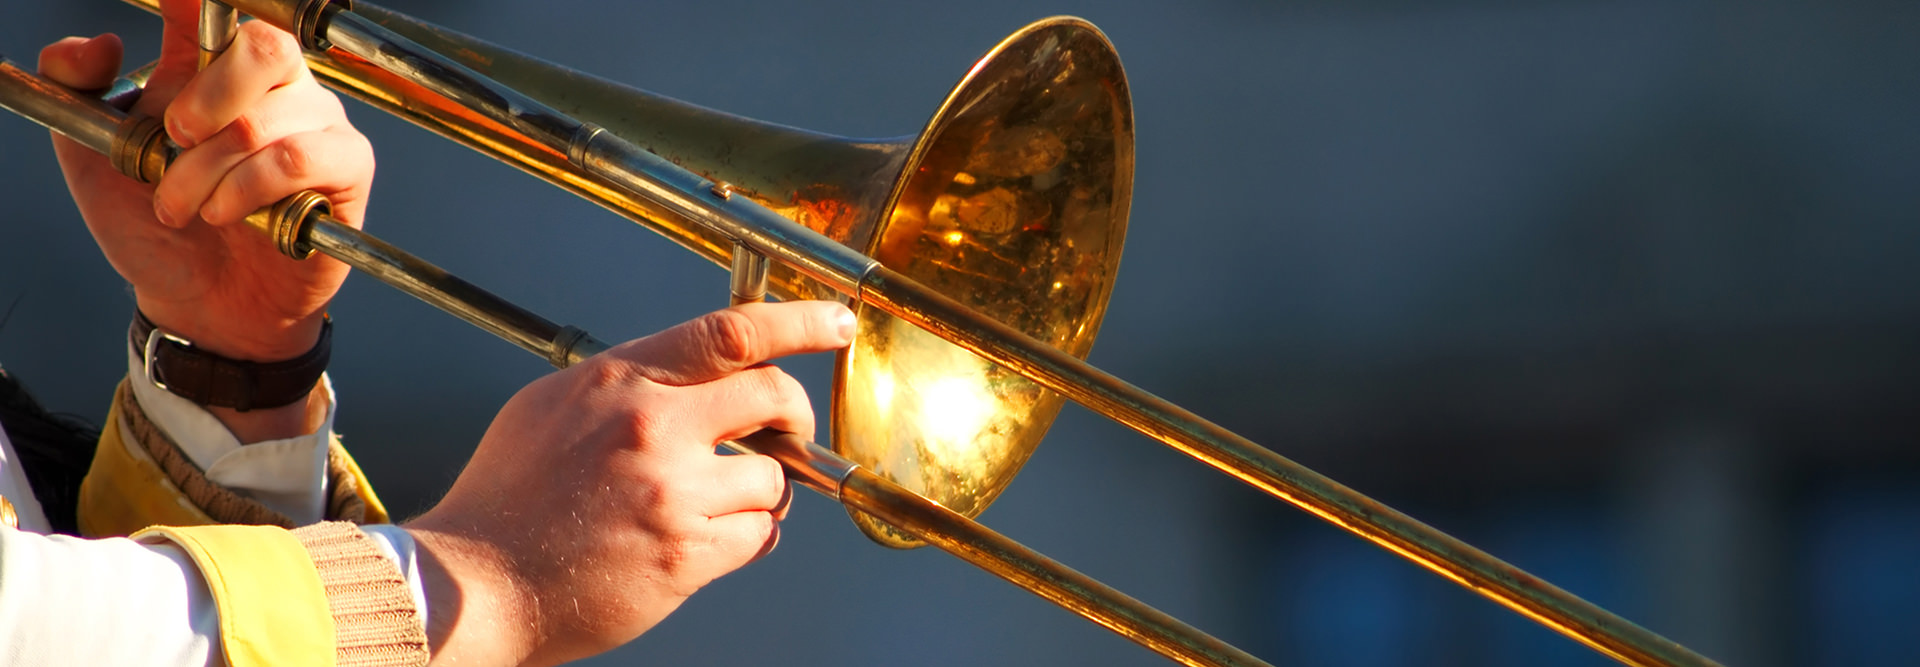 playing-trombone-in-somerville.jpg